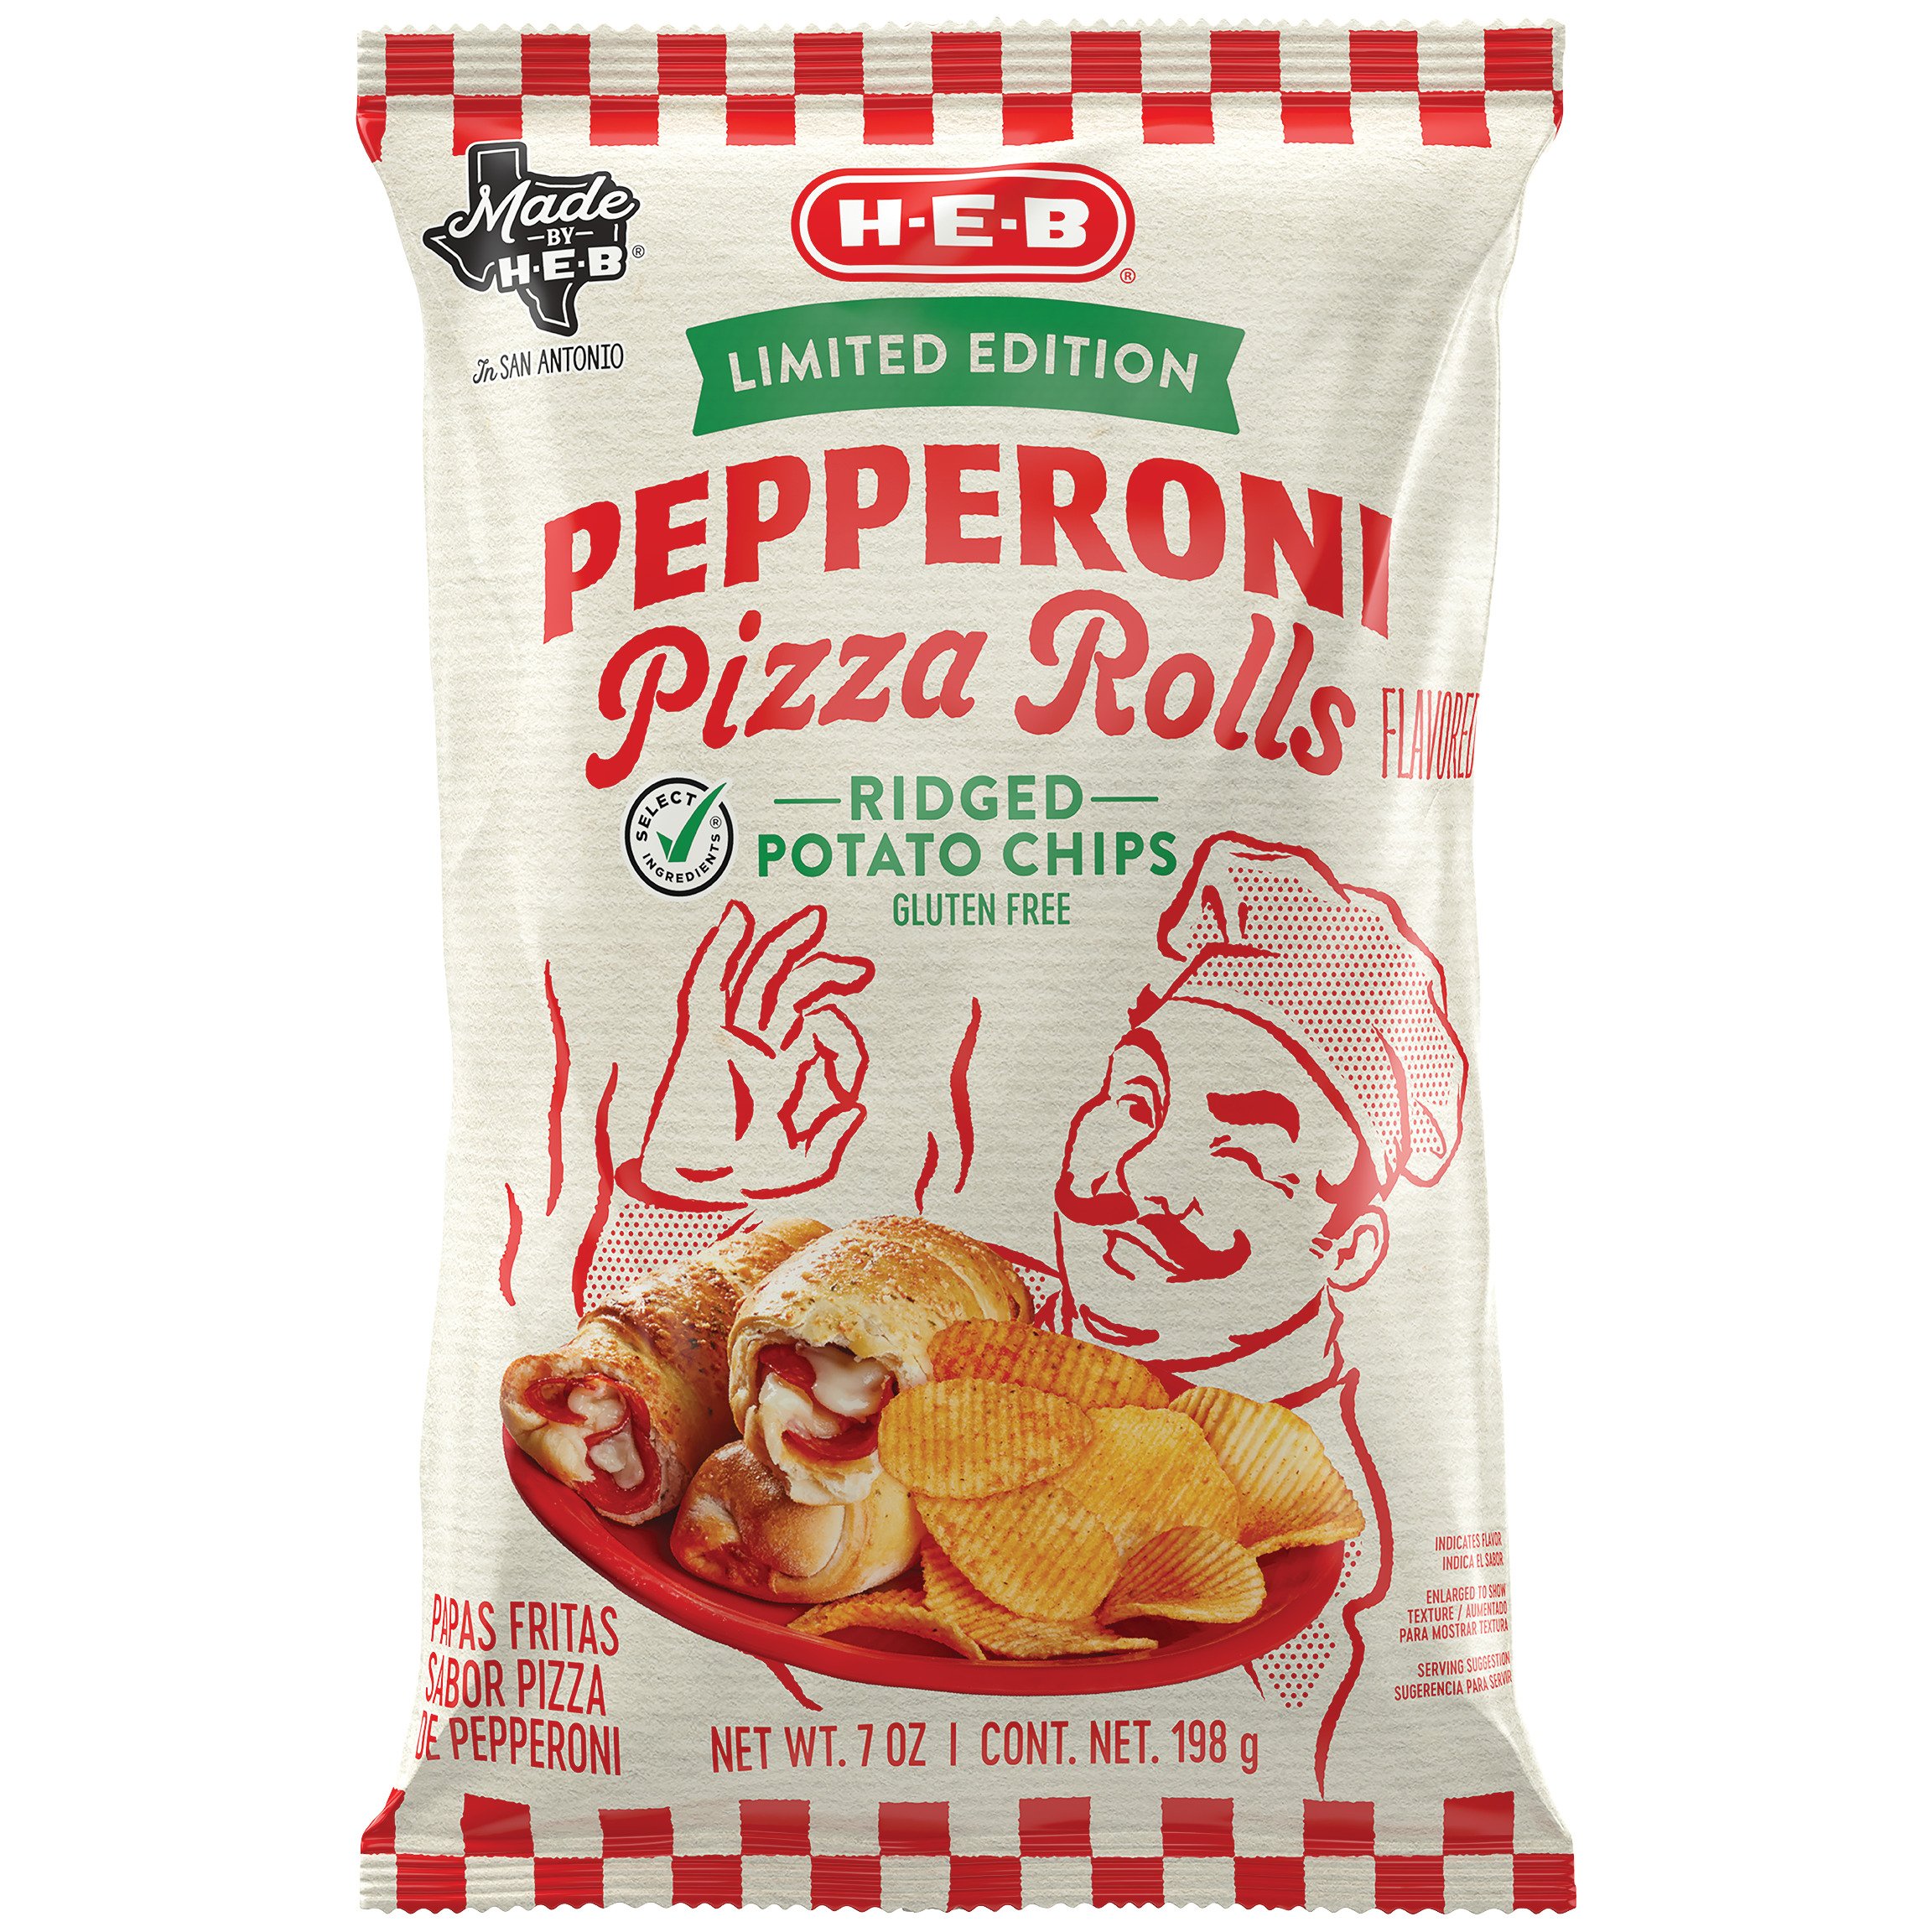 H-E-B Ridged Potato Chips - Pepperoni Pizza Rolls - Shop Chips at